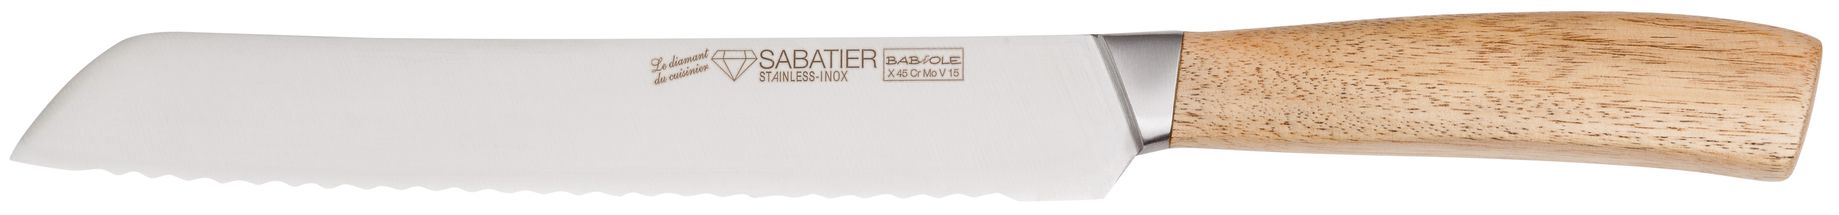 Diamant Sabatier Bread Knife Babiole 22 cm